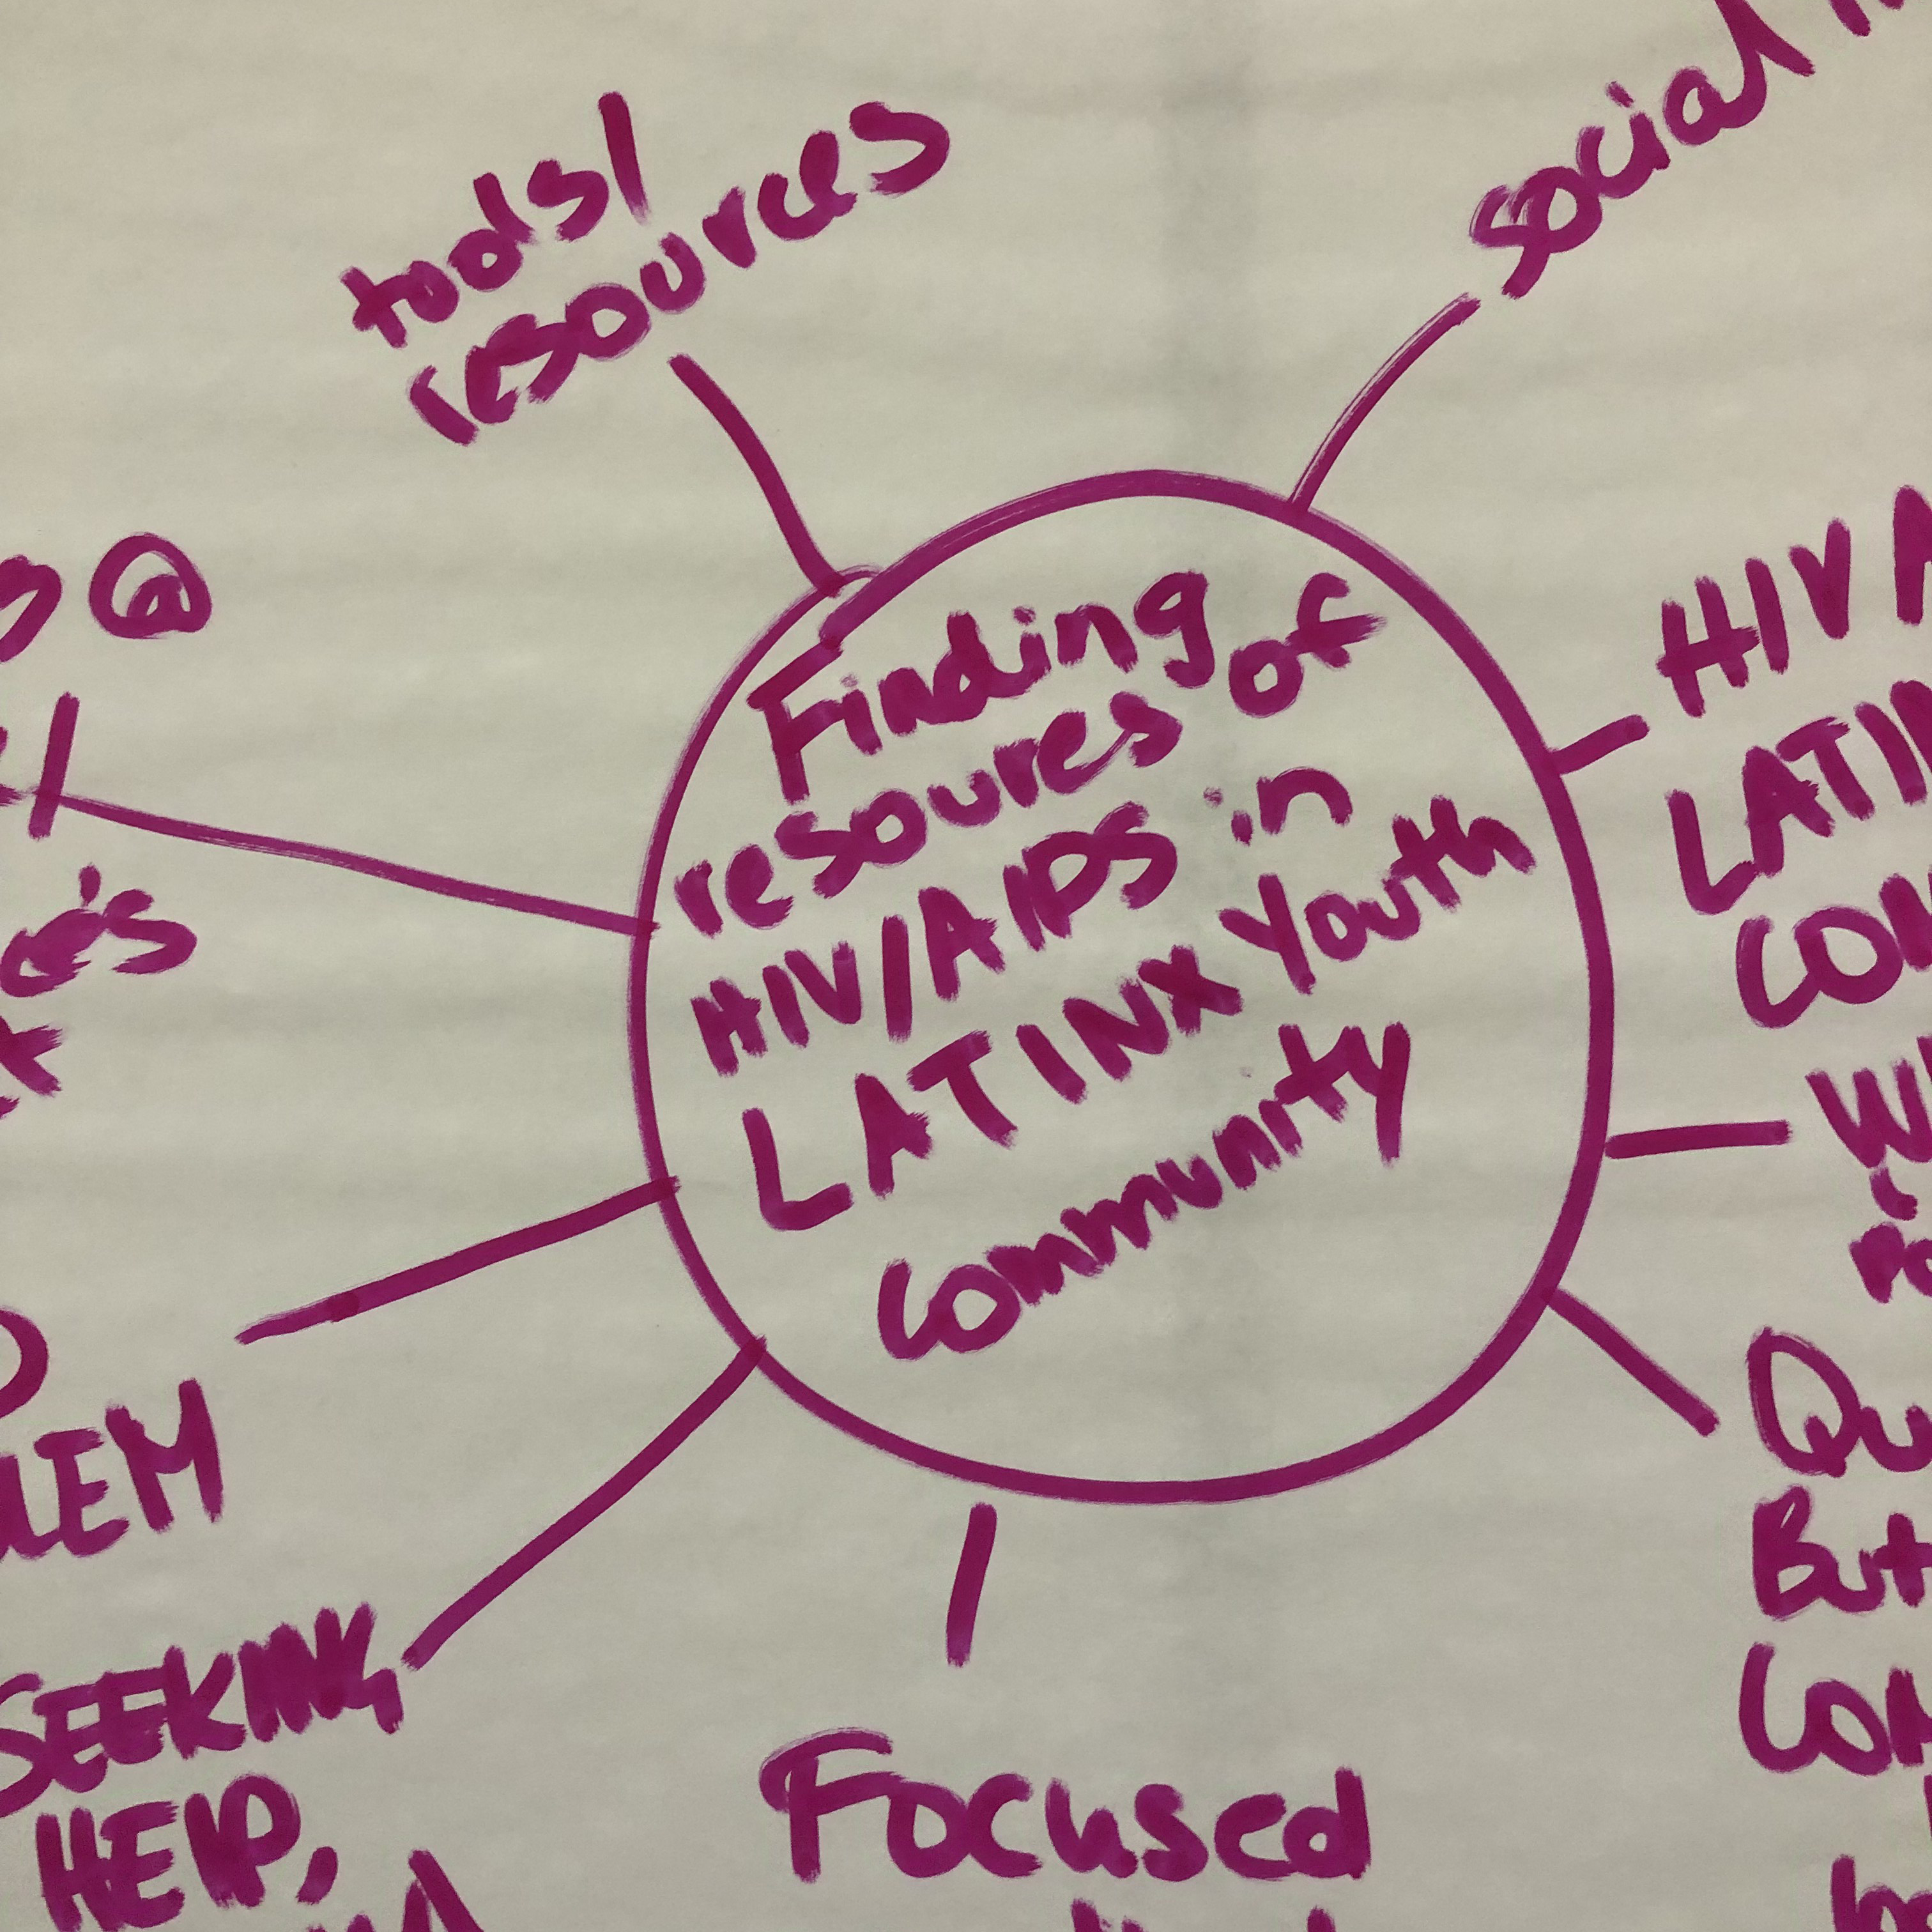 Using storytelling to raise awareness of HIV/AIDS